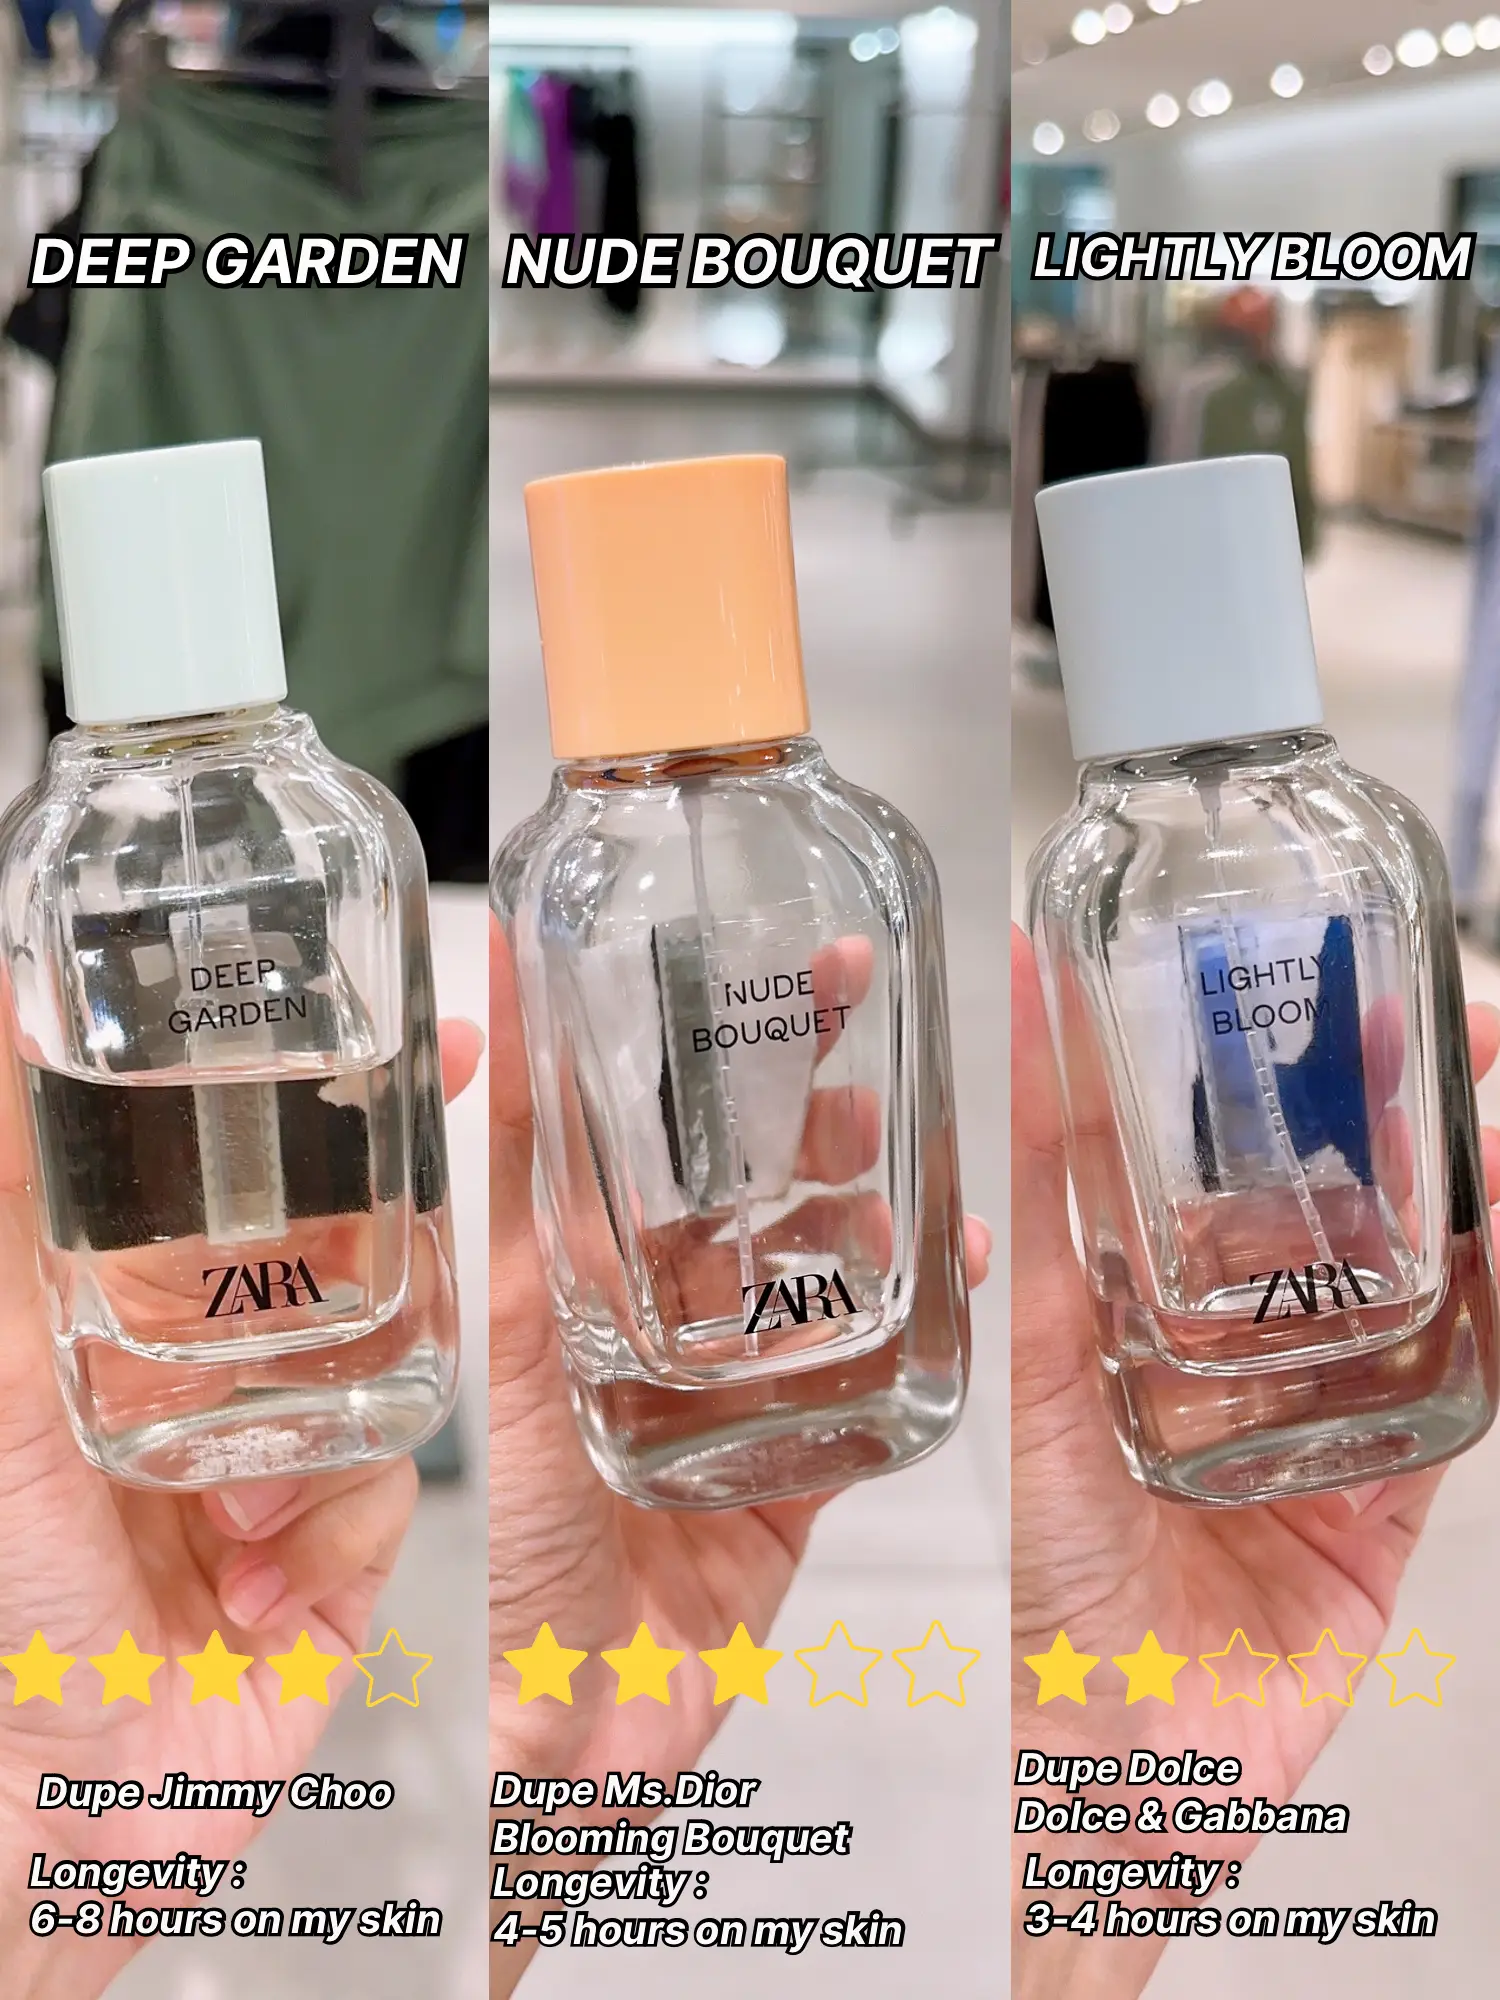 Mini fragrance haul and review, Zara Red Vanilla, Zara Nude Bouquet